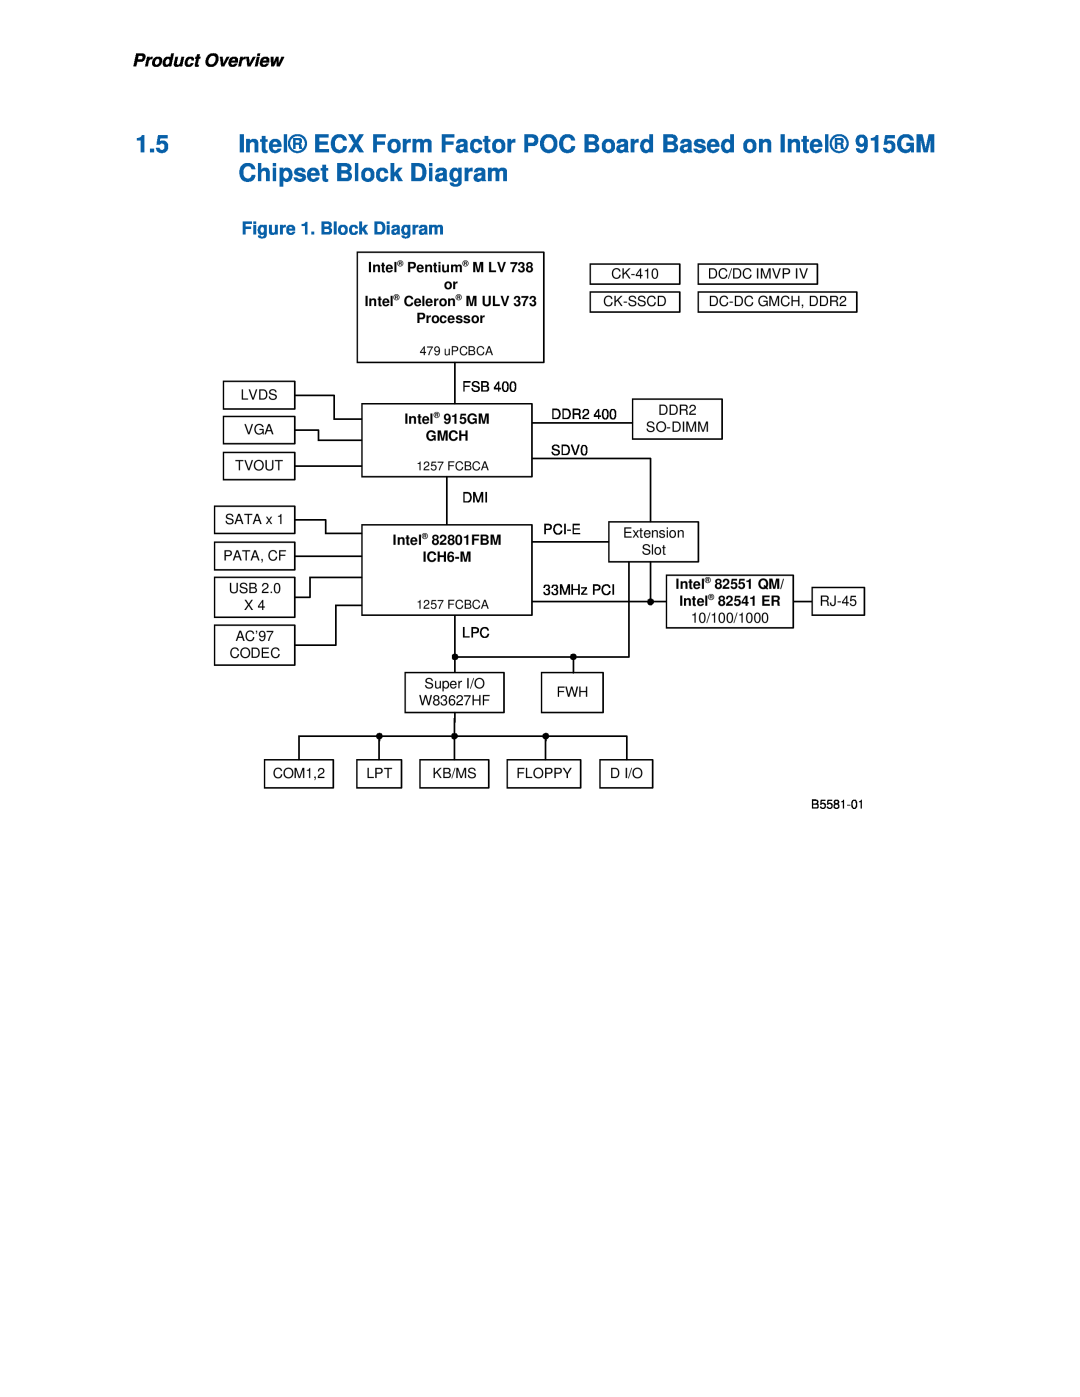 Intel Block Diagram, Product Overview, Intel Pentium M LV or Intel Celeron M ULV, Processor, Intel 915GM GMCH 